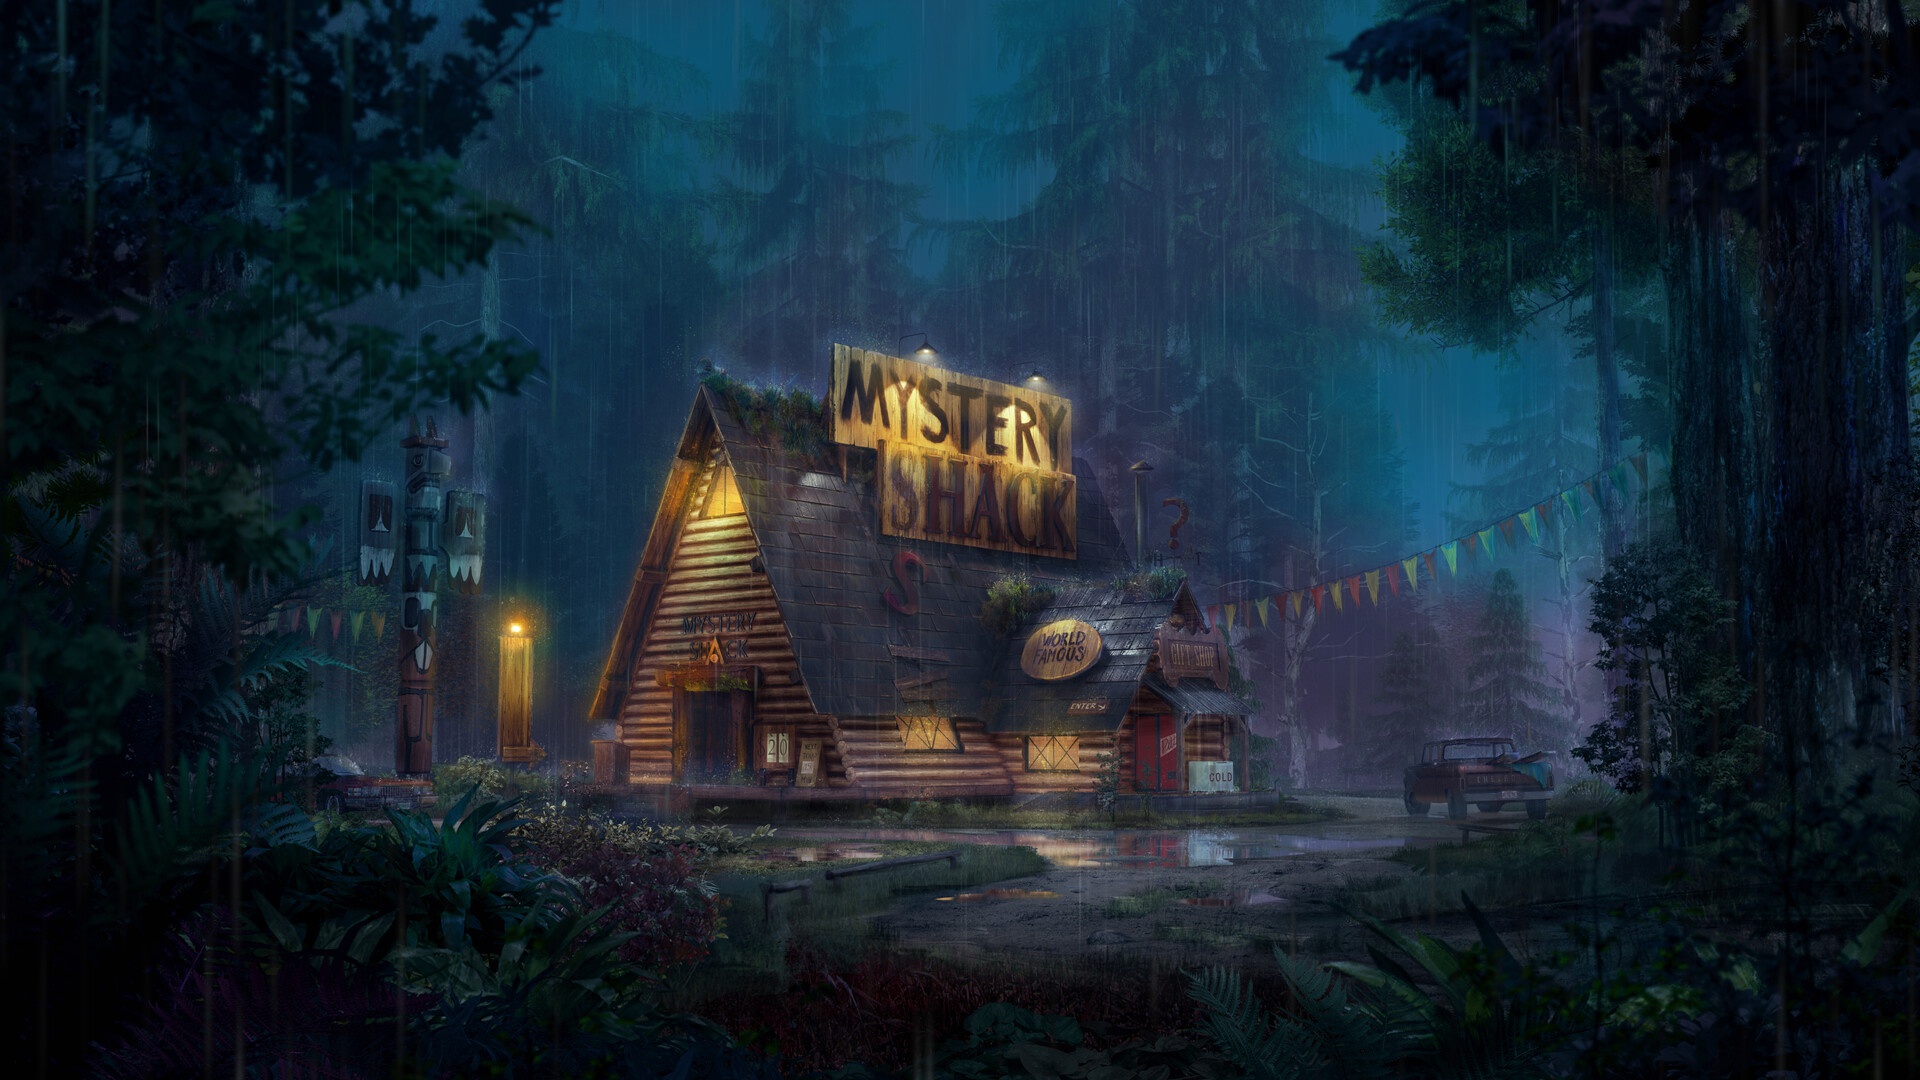 General 1920x1080 Gravity Falls Mystery cartoon TV forest shack night rain artwork